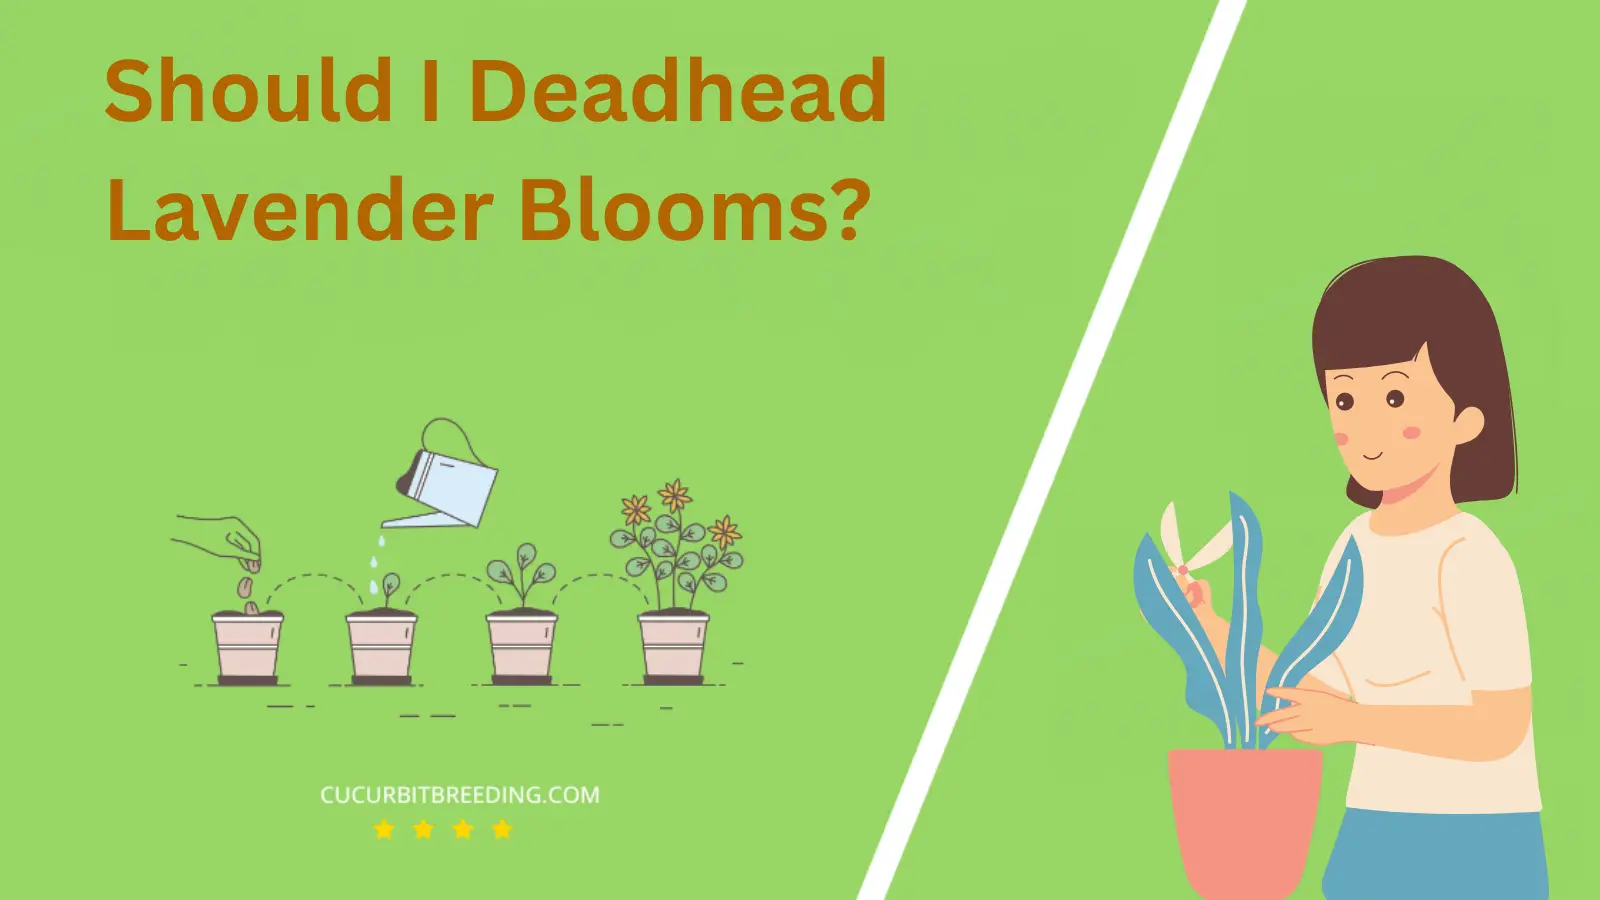 Should I Deadhead Lavender Blooms?